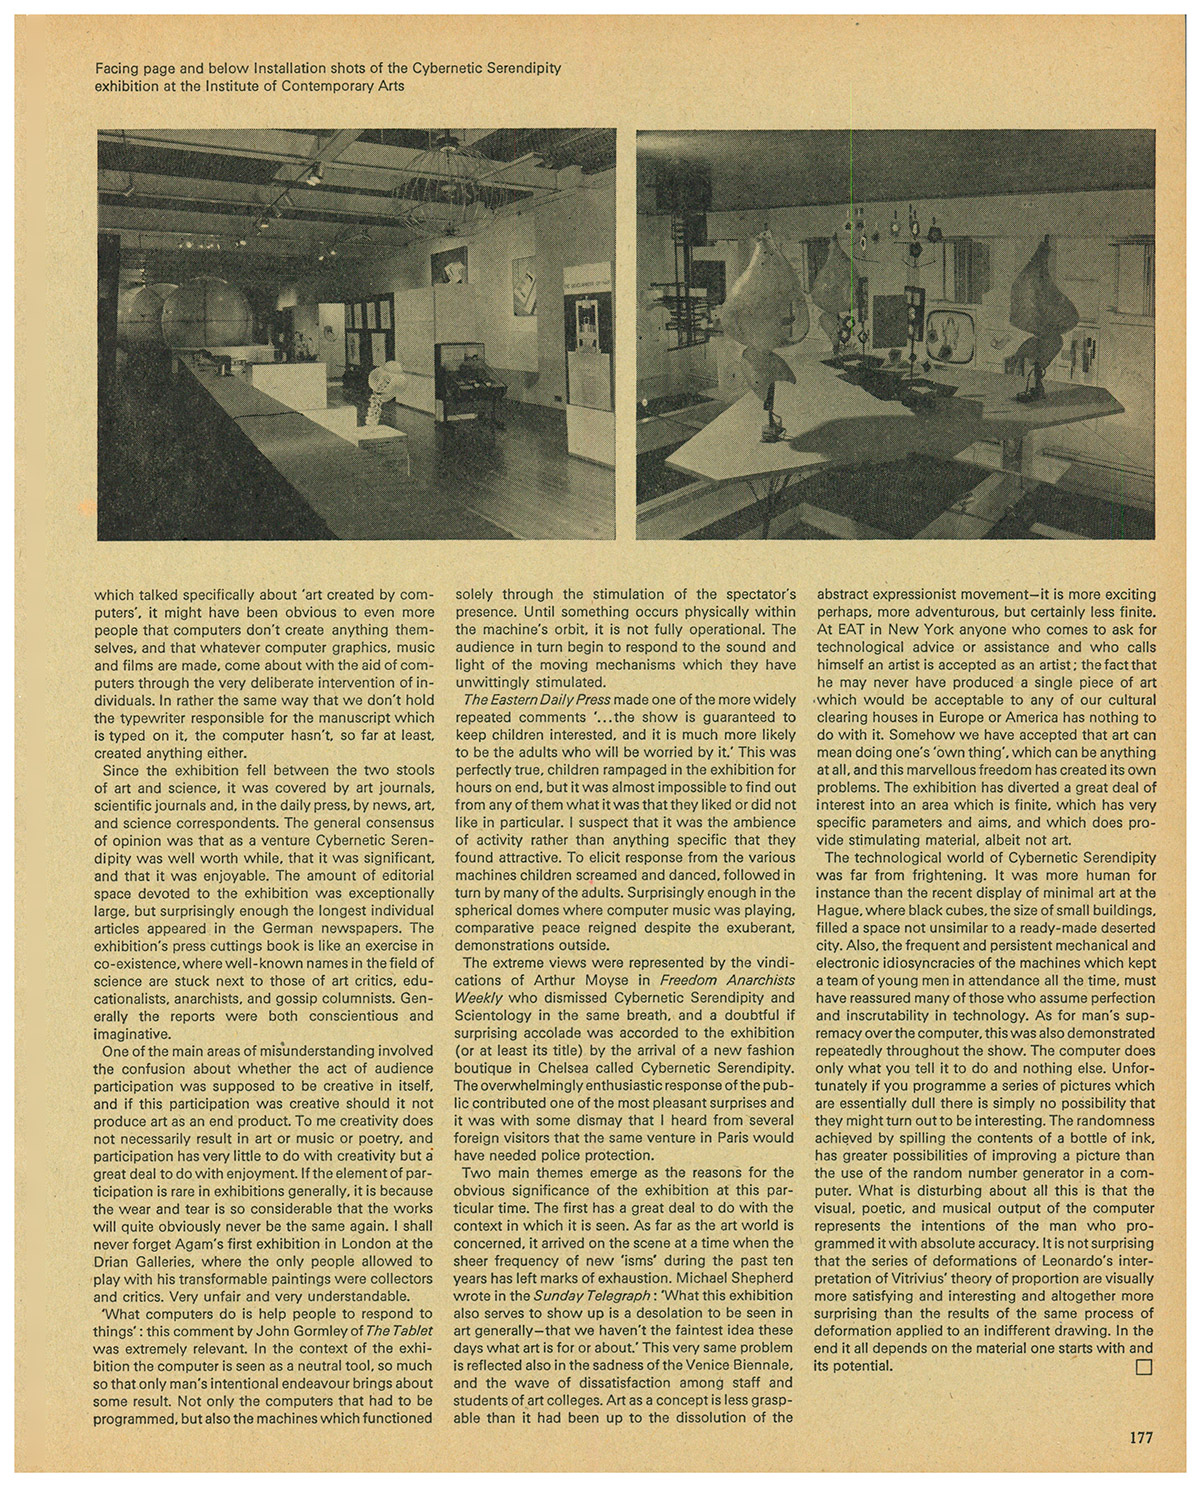 Studio International, Vol 176, No 905, November 1968, p. 177.